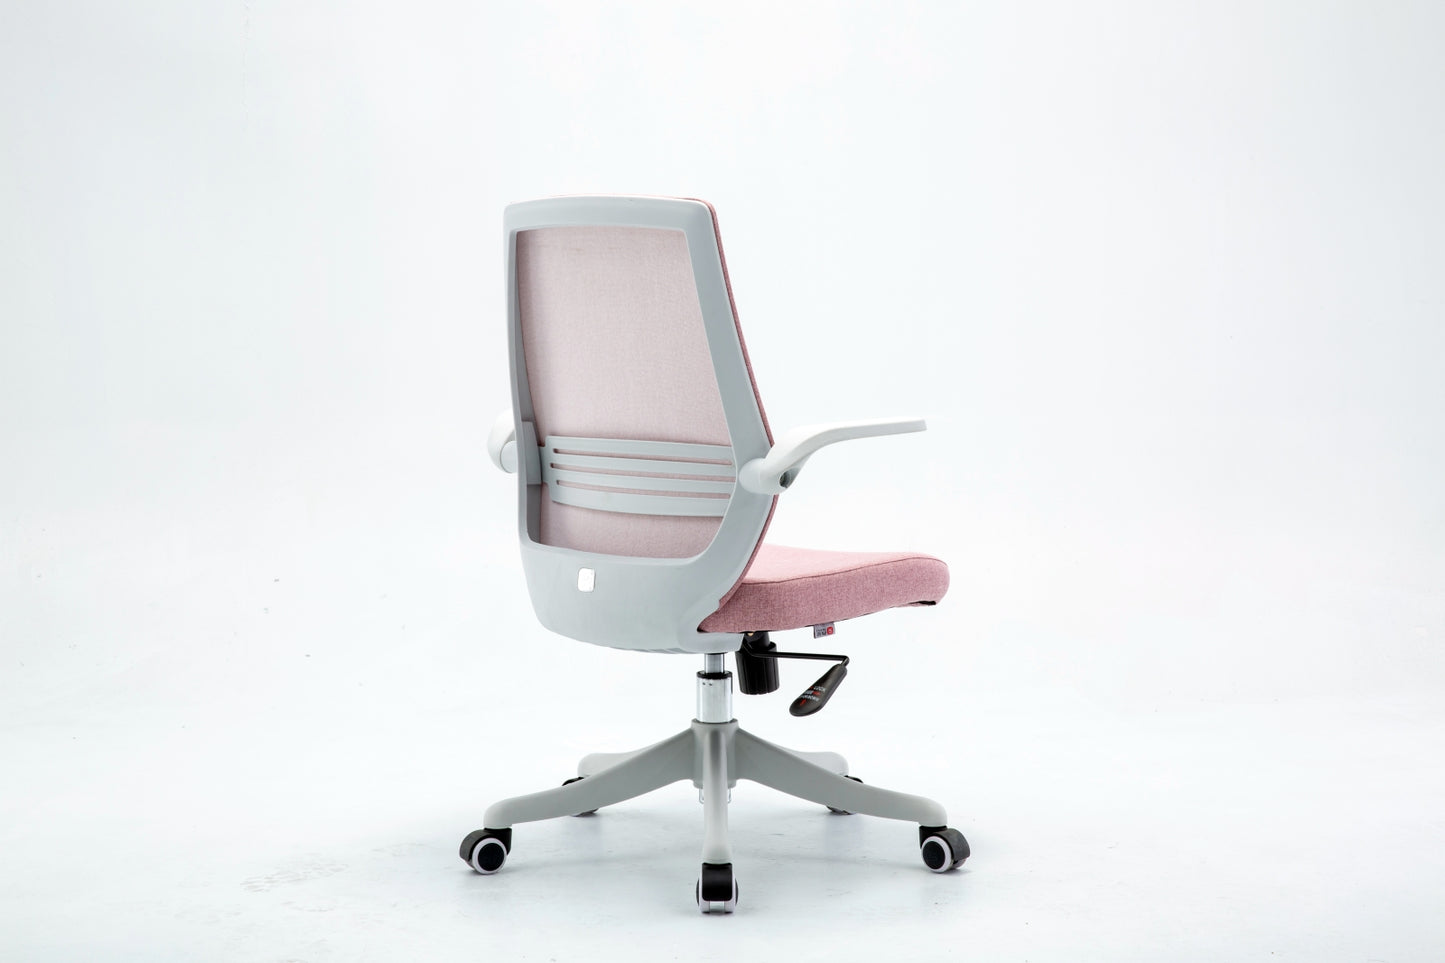 Sihoo M76 Ergonomic Chair